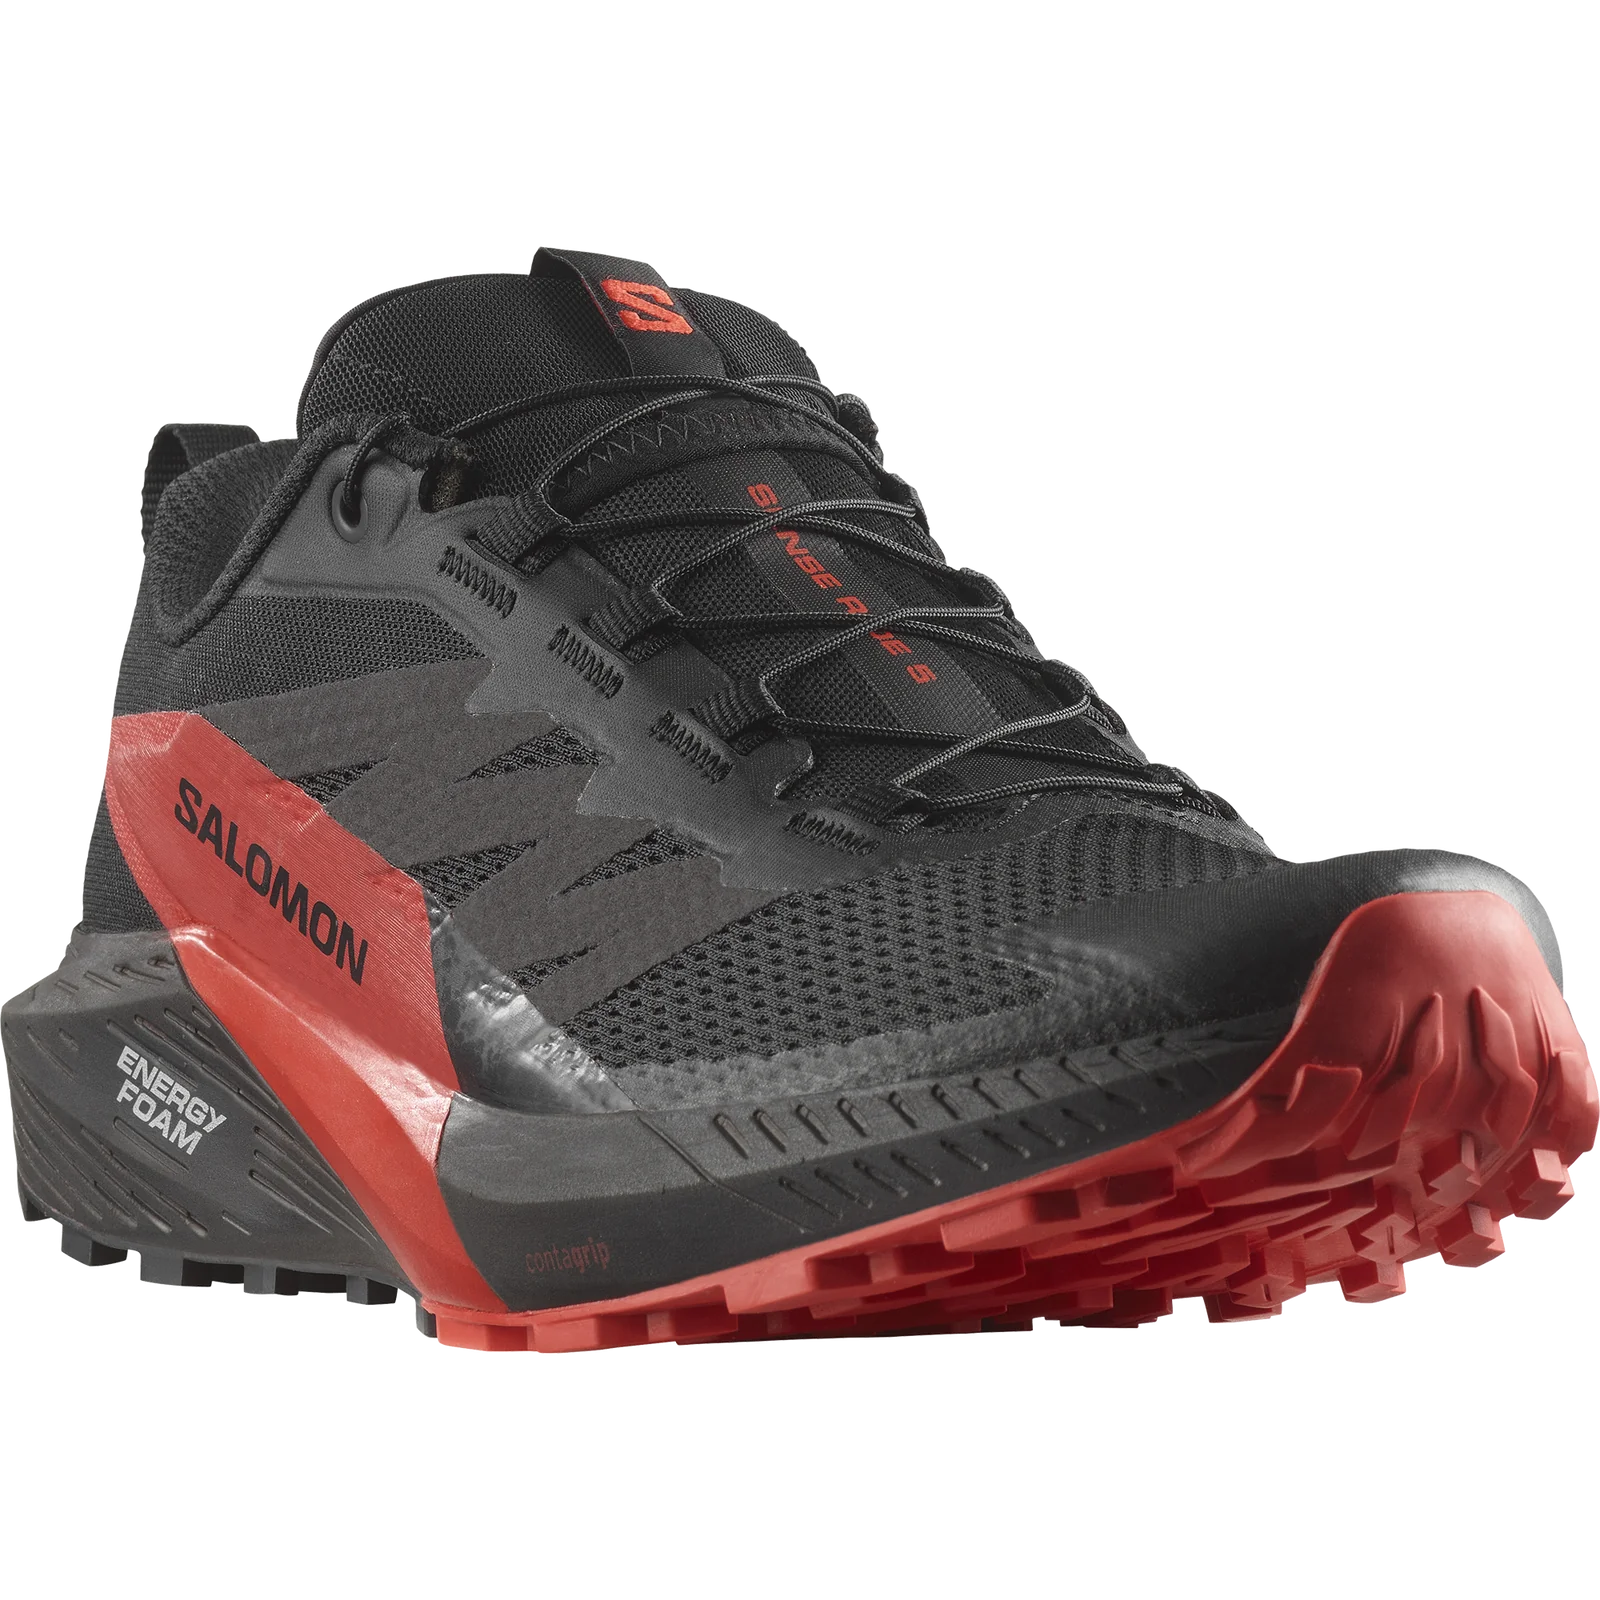 Salomon Sense Ride 5 Shoes (Men's) Black/Fiery Red/Black - Find Your Feet Australia Hobart Launceston Tasmania